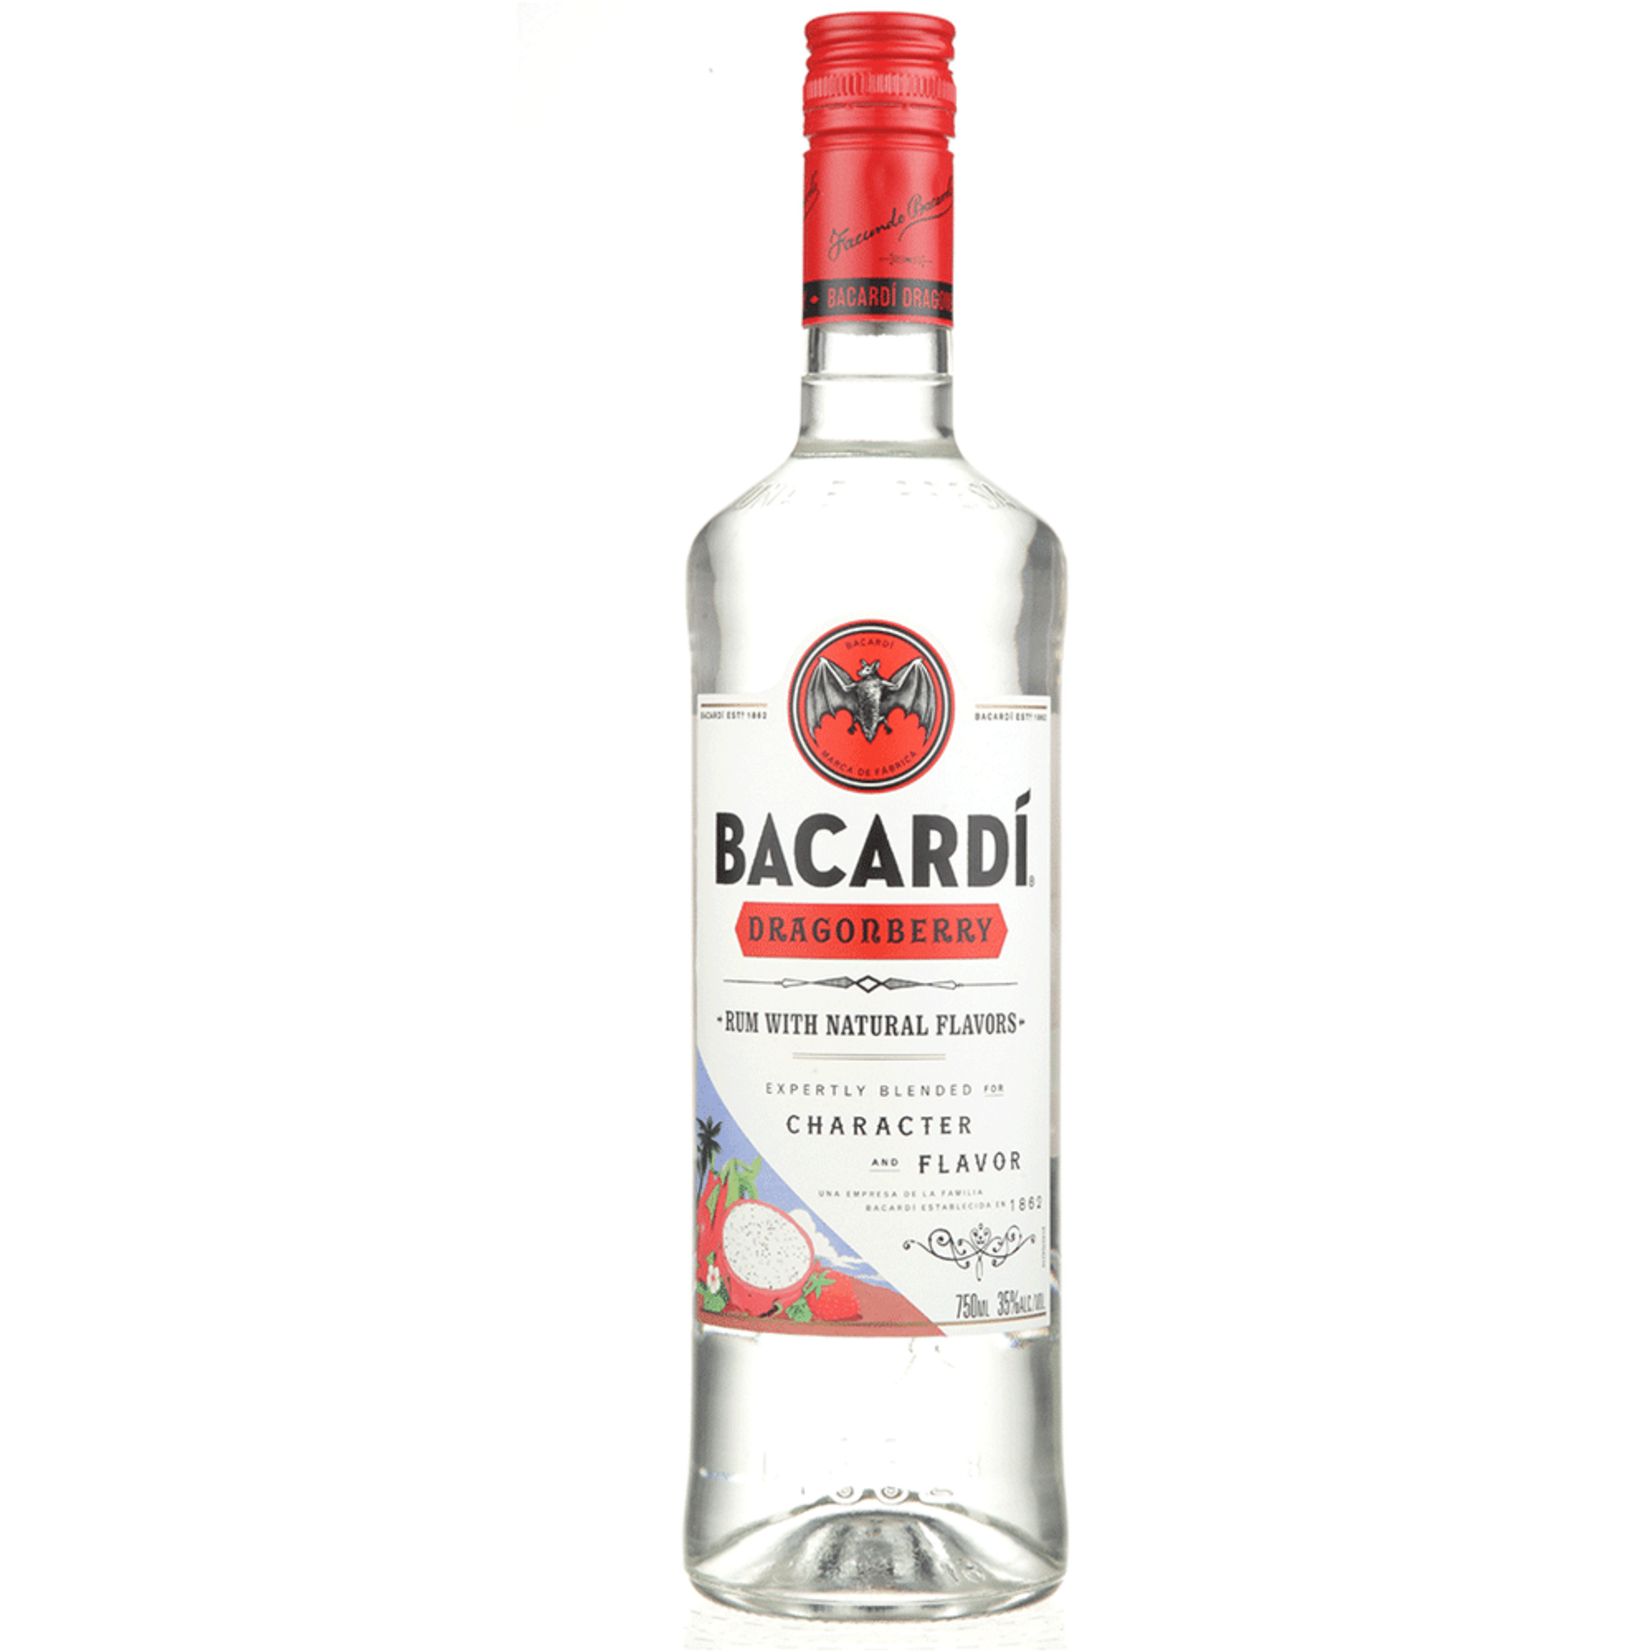 Bacardi Bacardi Dragonberry Rum 70Proof 750ml